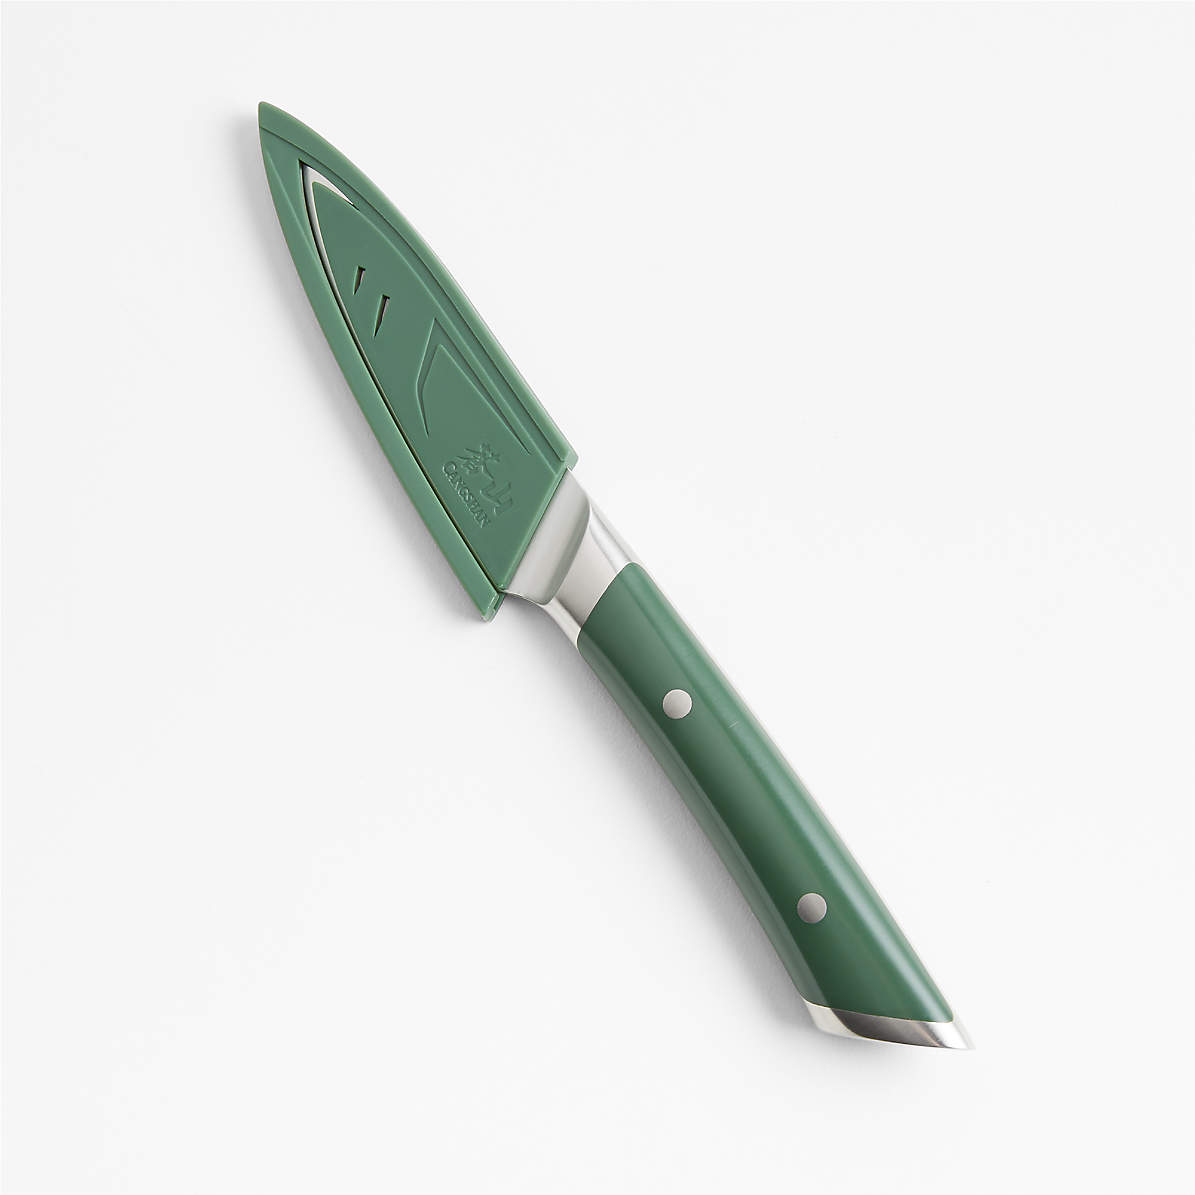 8x Kitchen Knife For Kids Safety Knife Lettuce Salad Knife